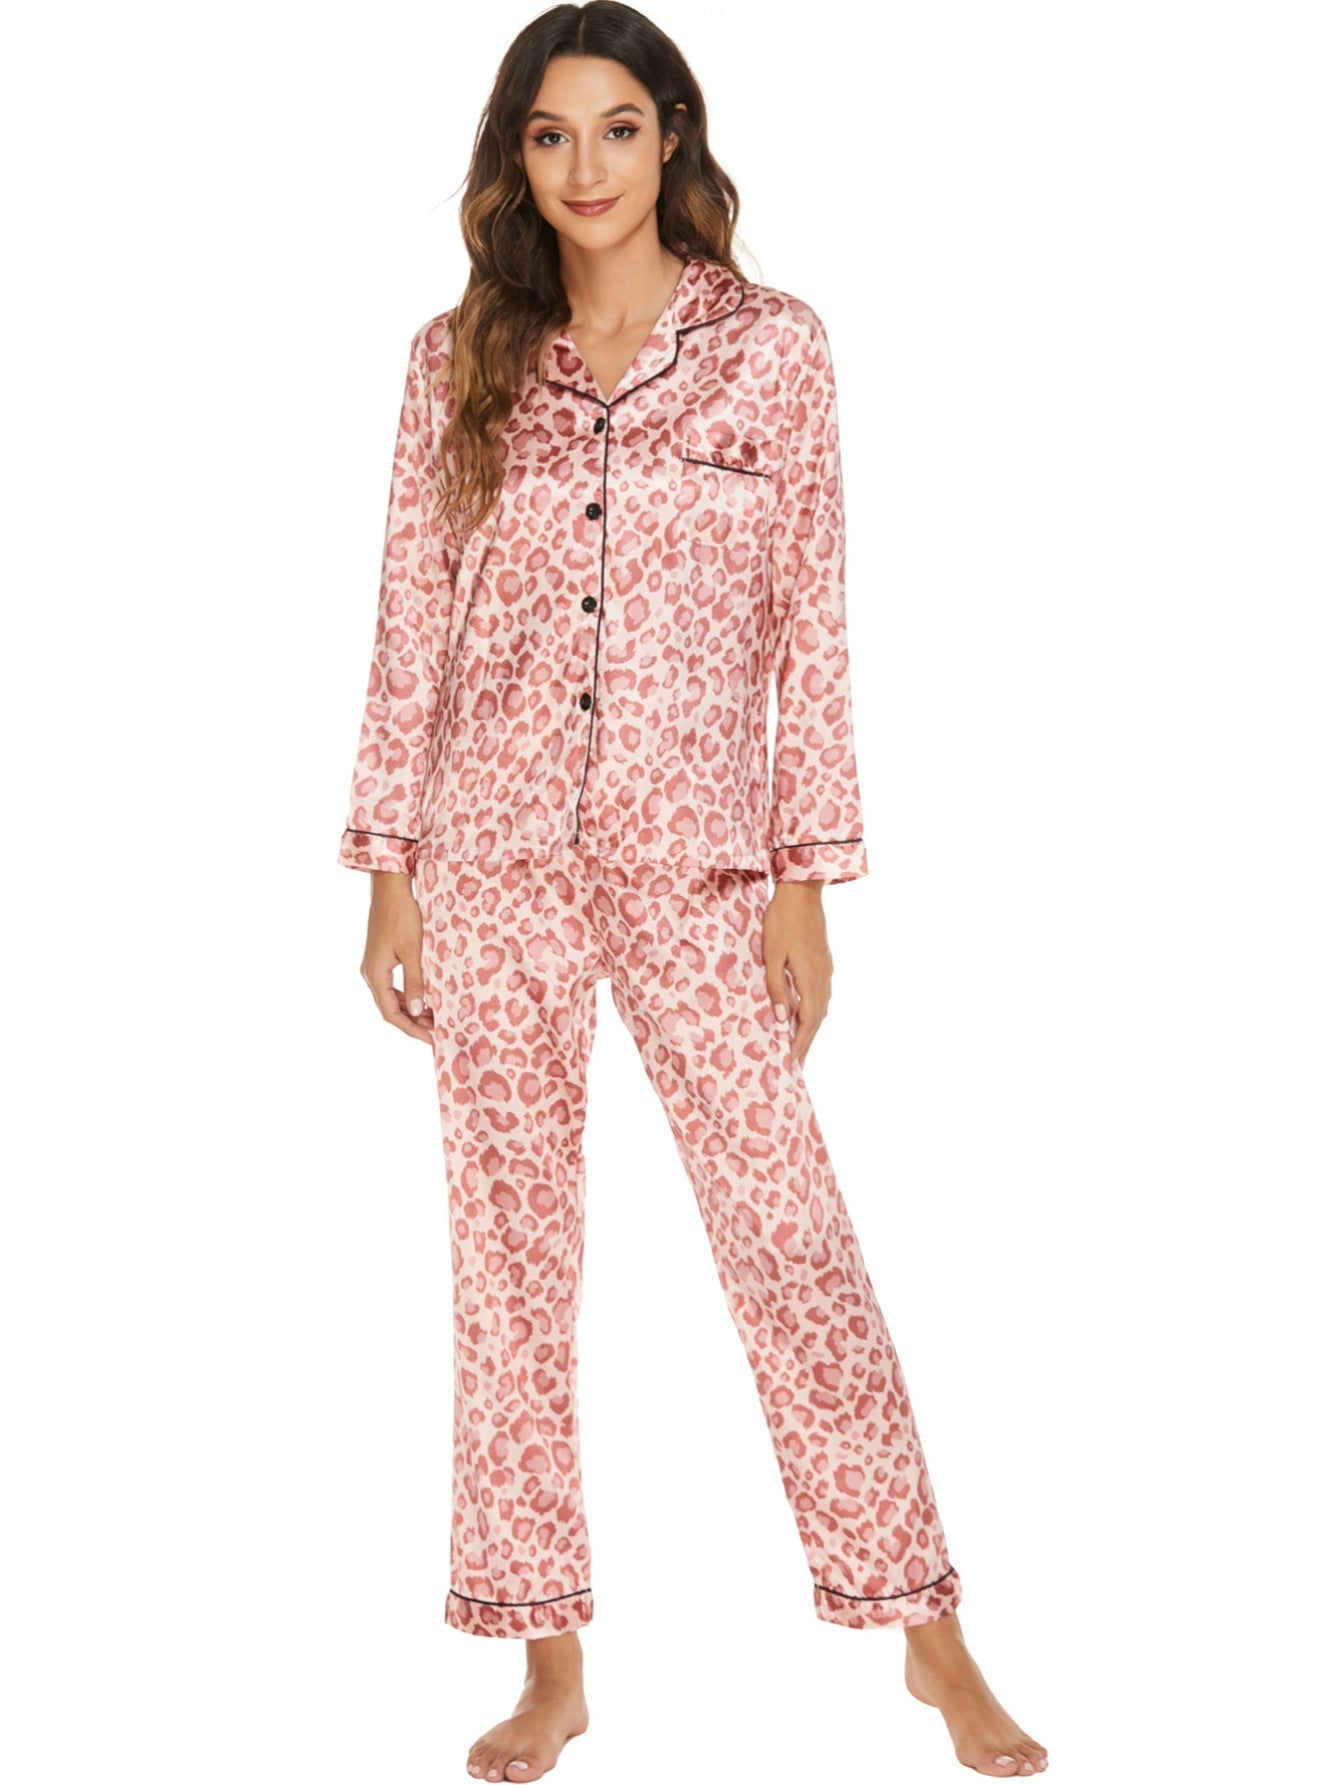 Home Wear Suit Pajamas Women Cardigan Long Sleeve Long Sleeve Autumn